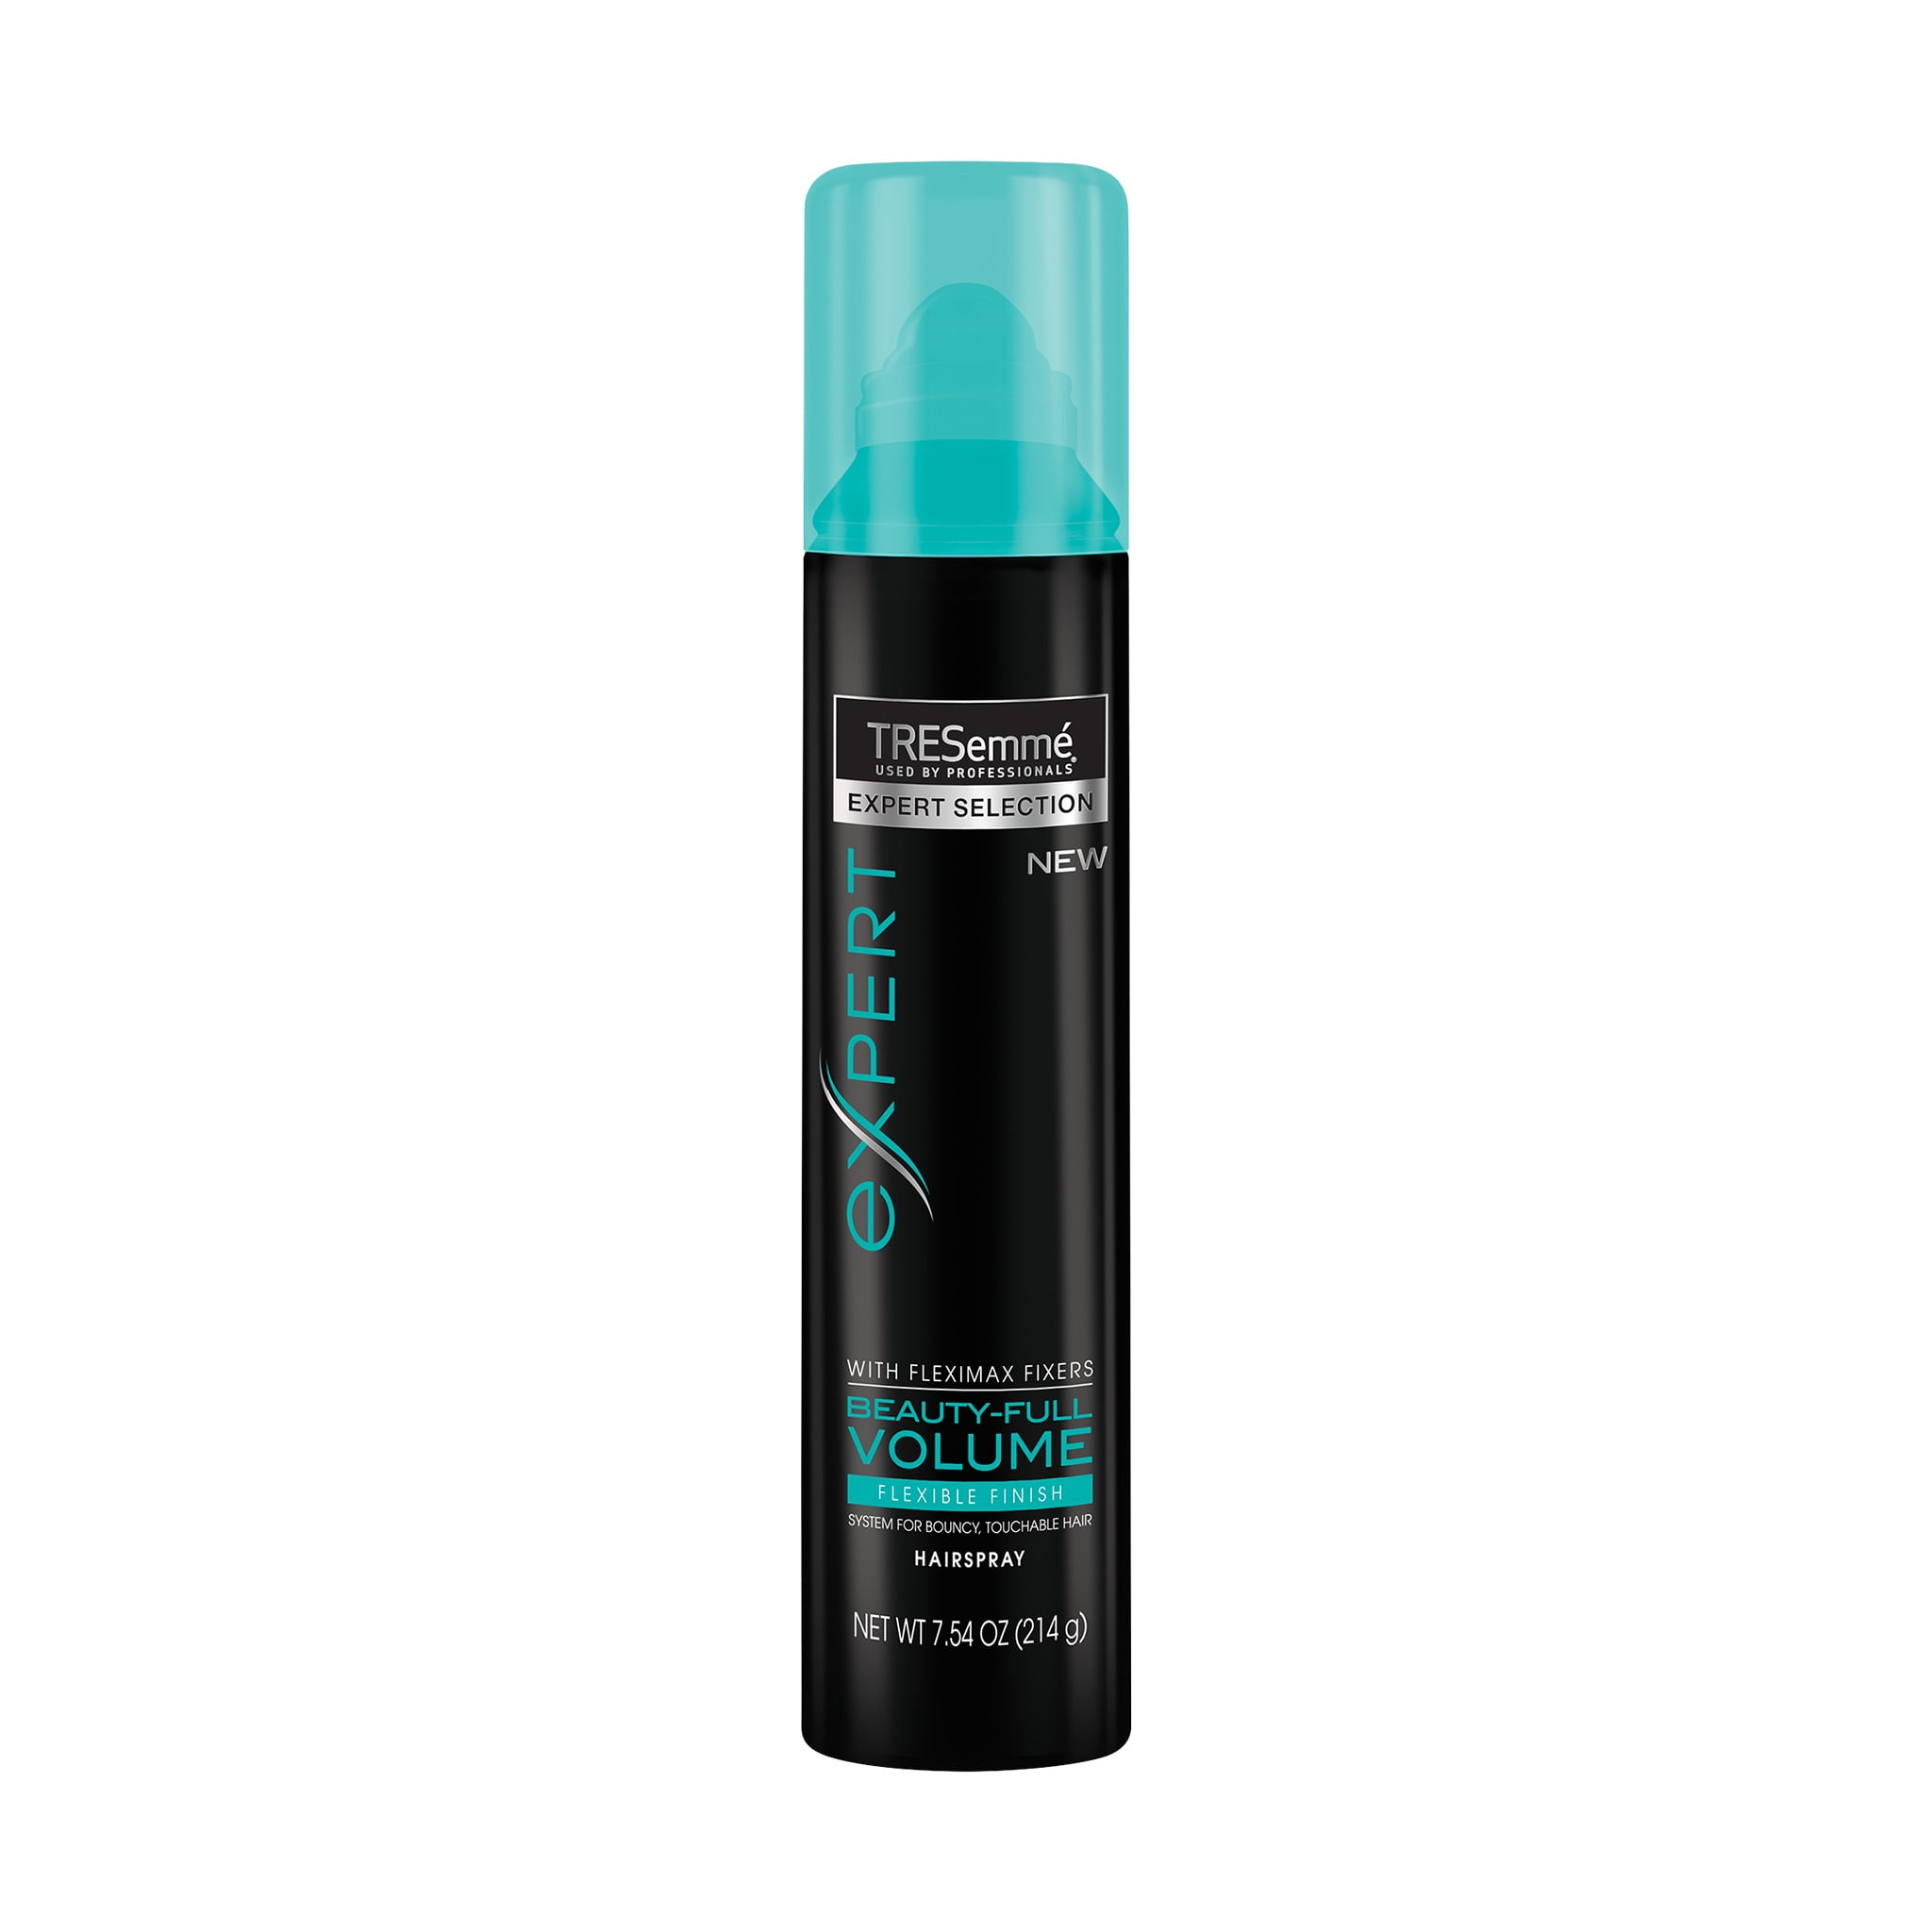 TRESemme Beauty Full Volume Flexible Finish Hair Spray, 7.54 oz